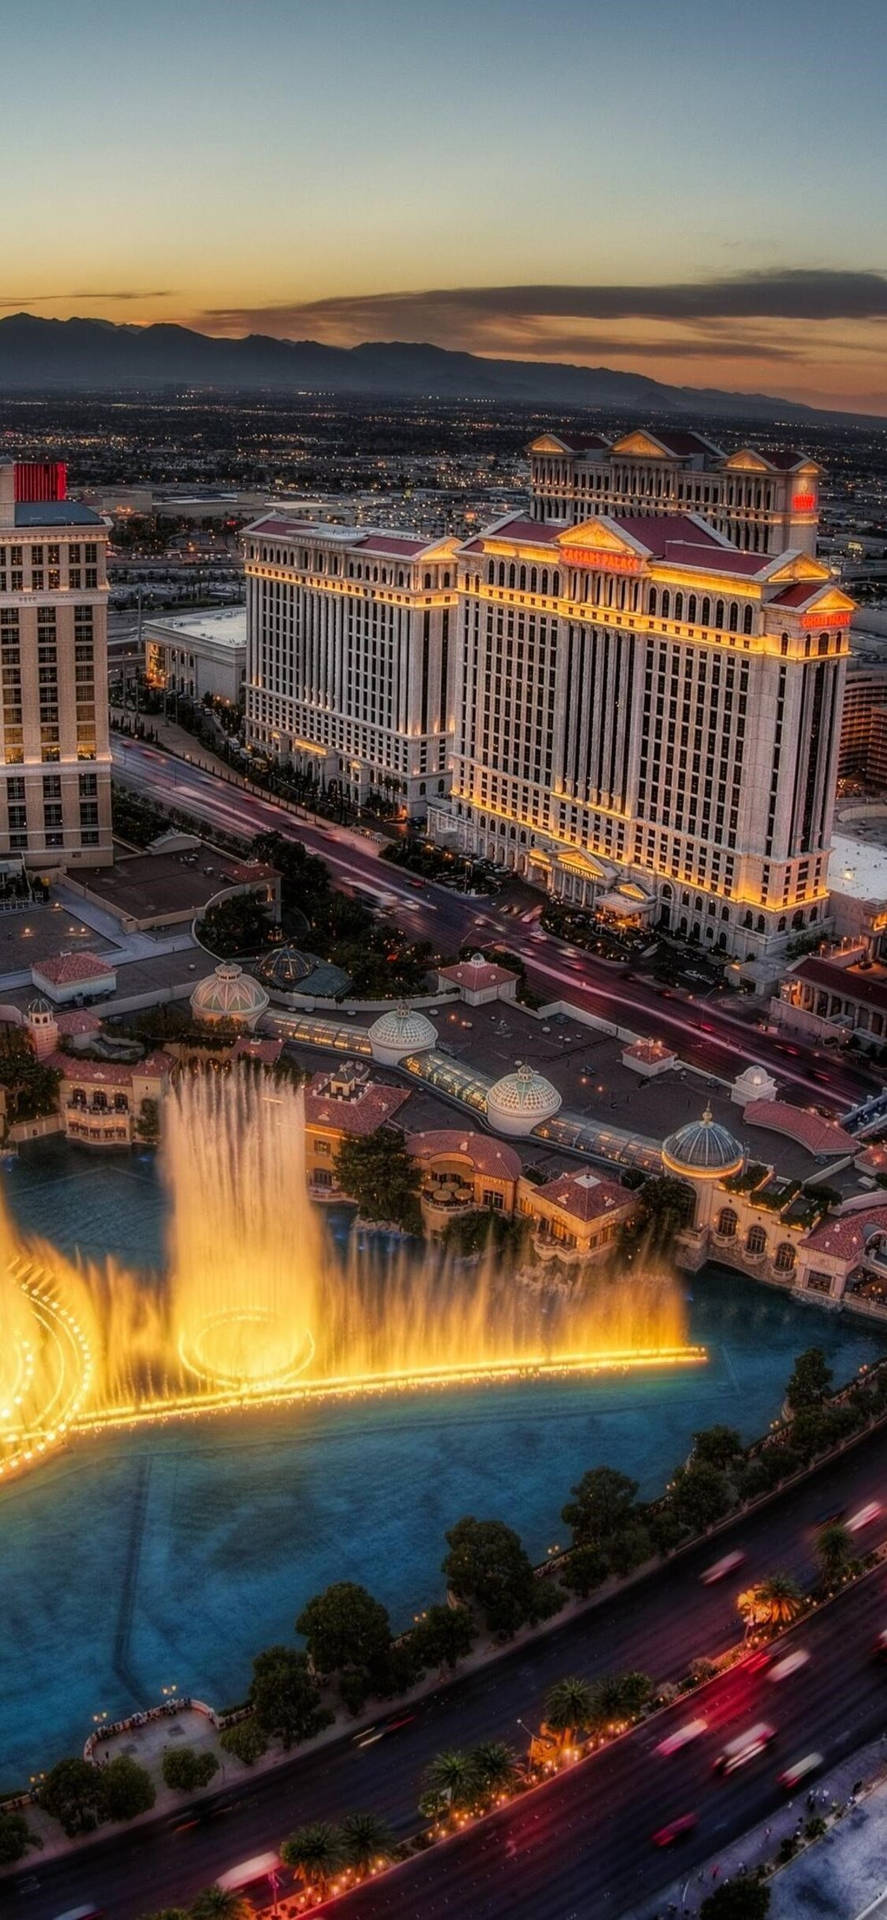 Caesars Palace Tower In Vegas Iphone Wallpaper